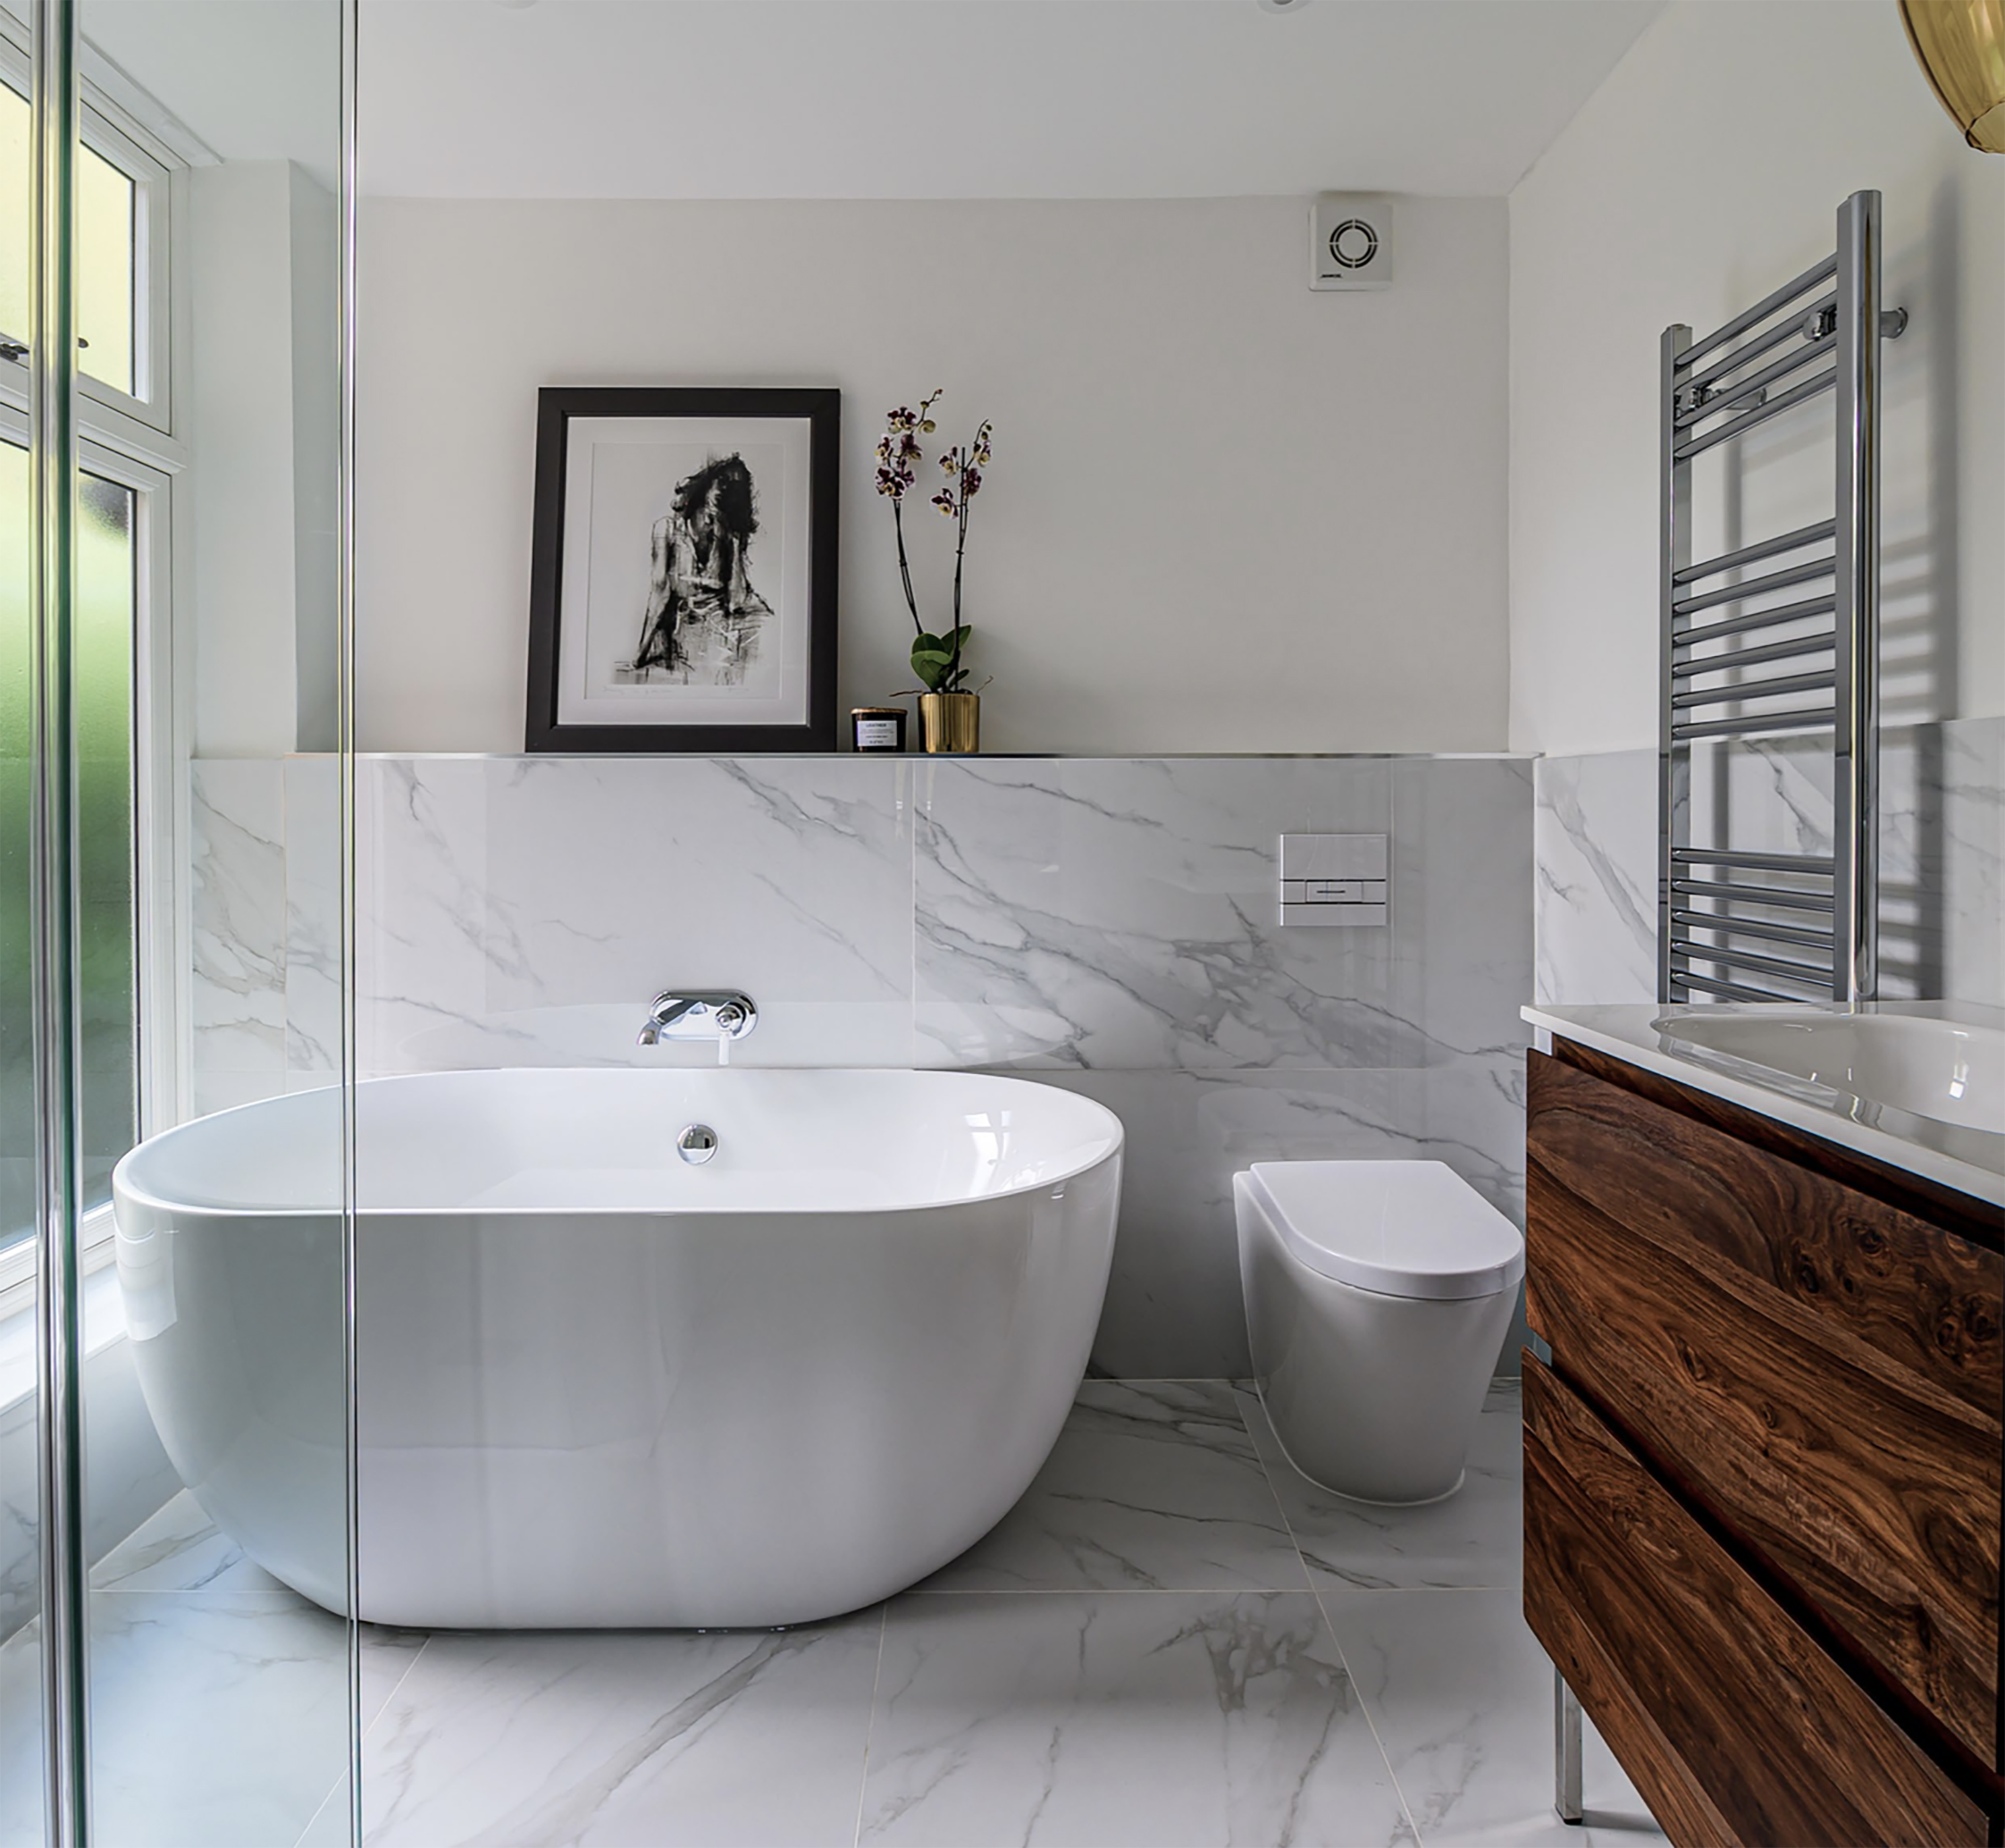 14 Best Gray Bathroom Ideas - Chic Gray Bathroom Design Pictures